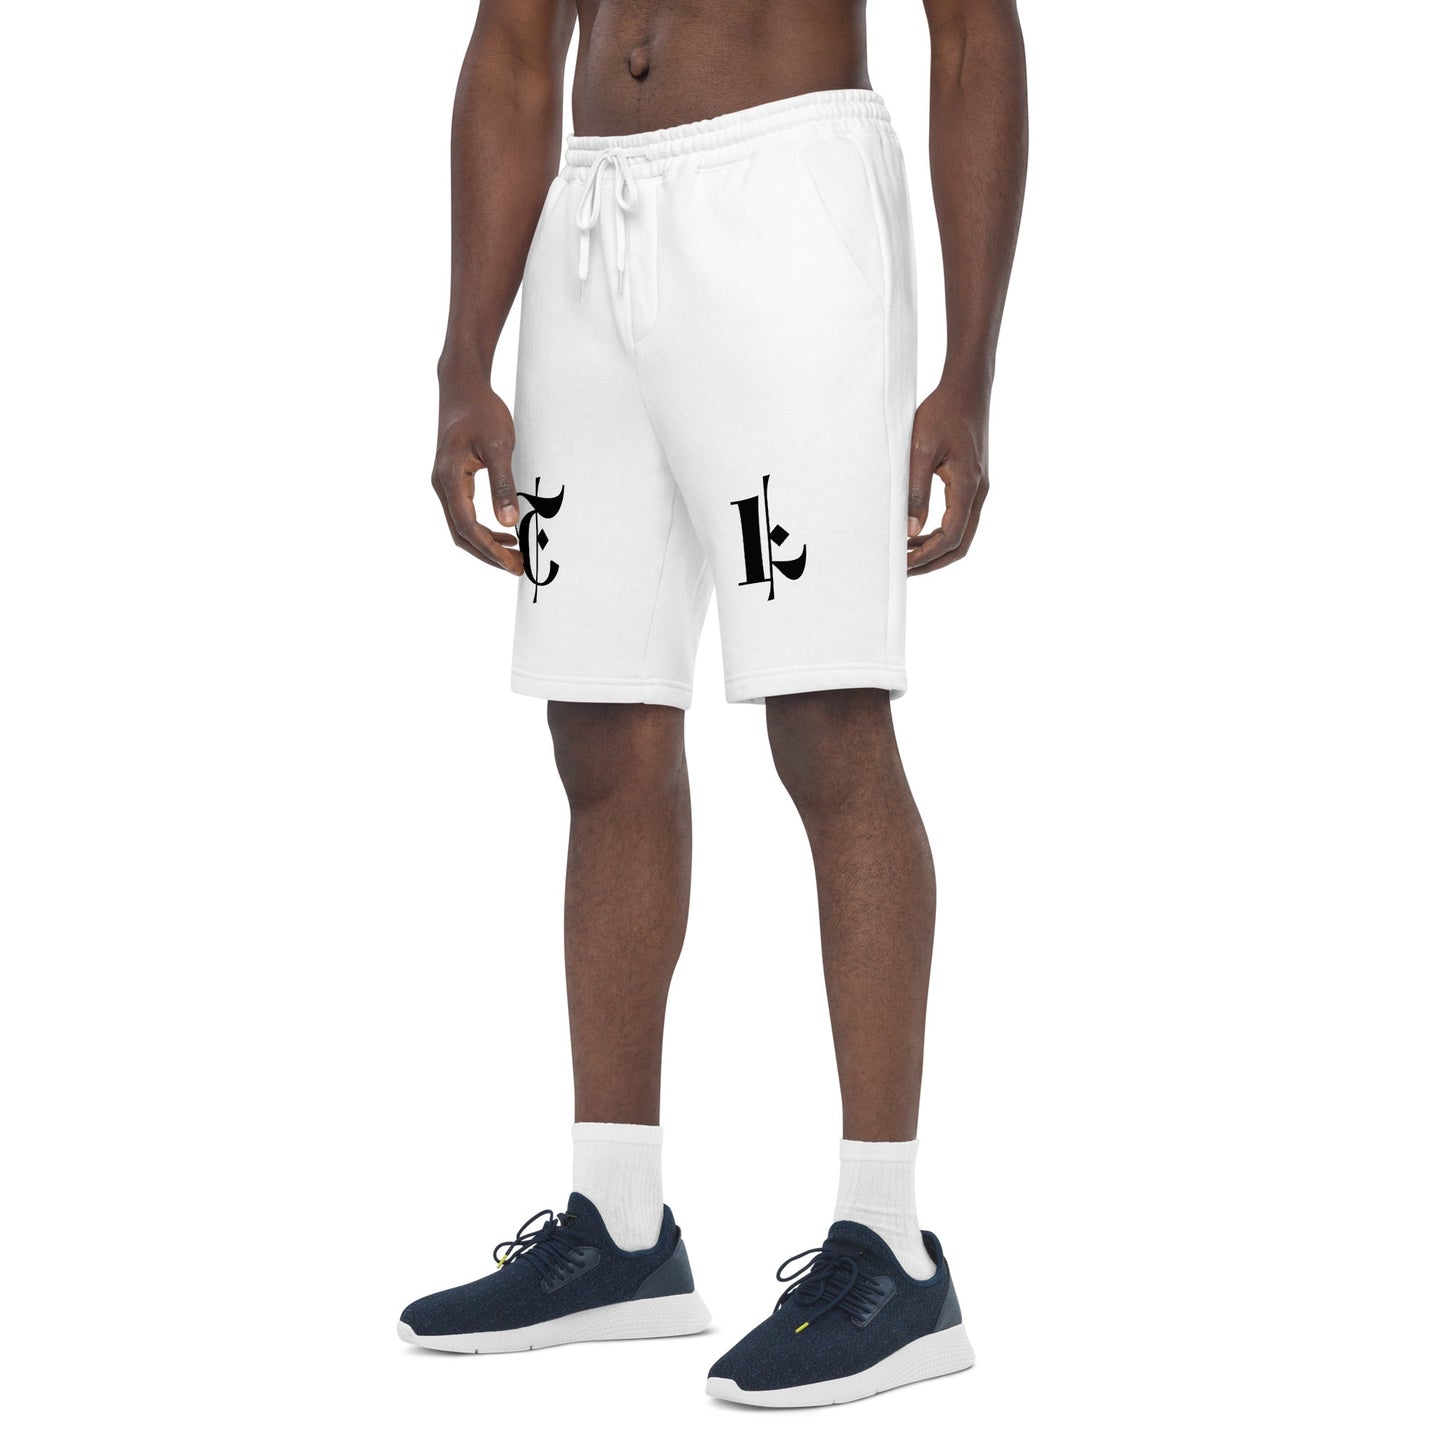 Men's White Fleece Shorts Black #TL 2X+